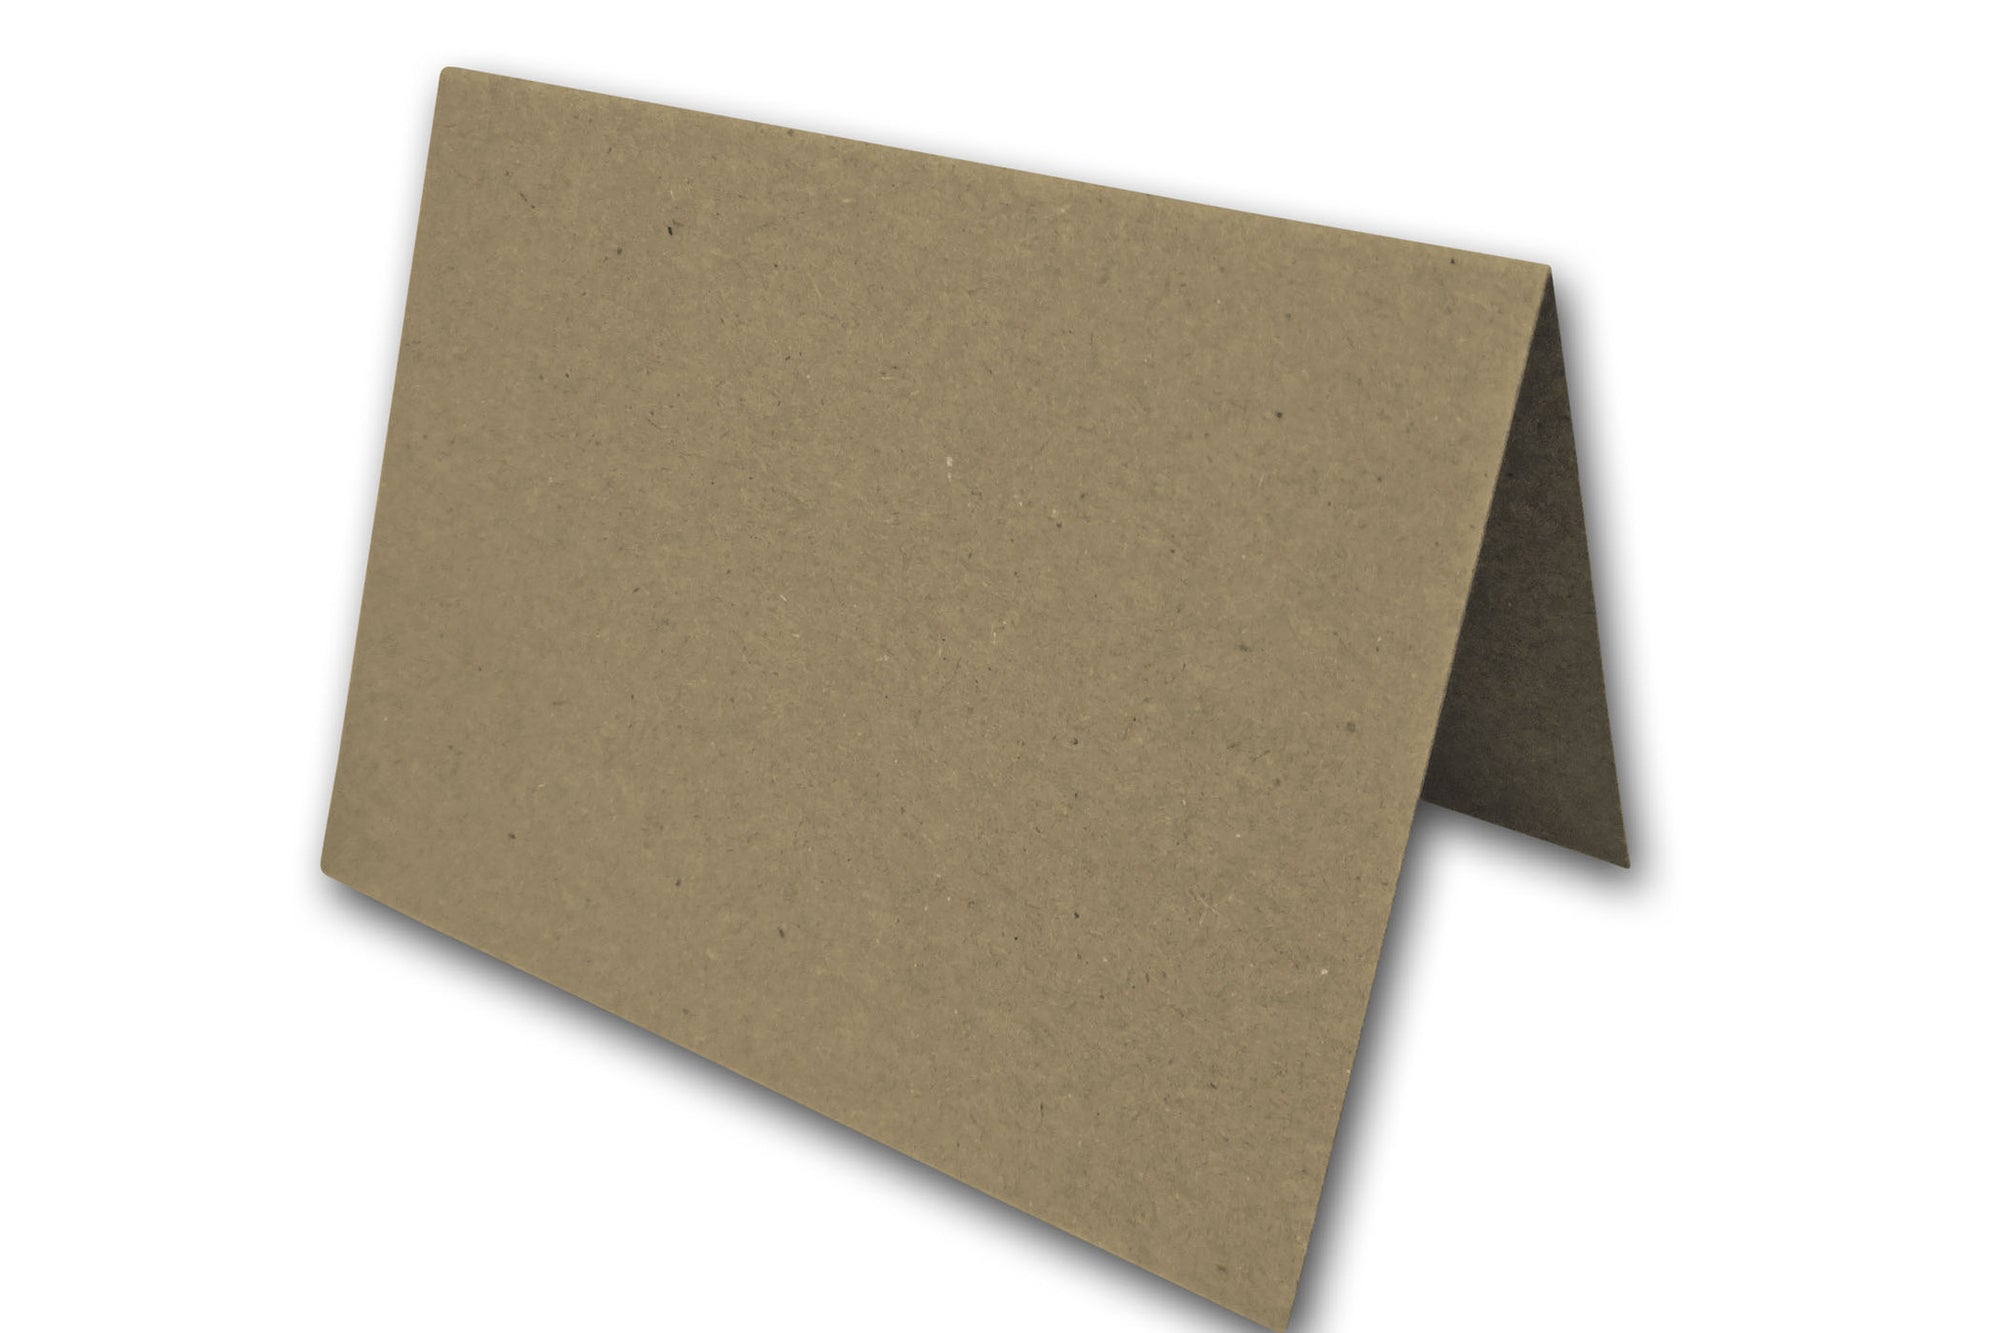 JAM PAPER Matte 60lb Cardstock - 8.5 x 11 Coverstock - 162 gsm - Brown  Kraft PaperBag - 50 Sheets/Pack